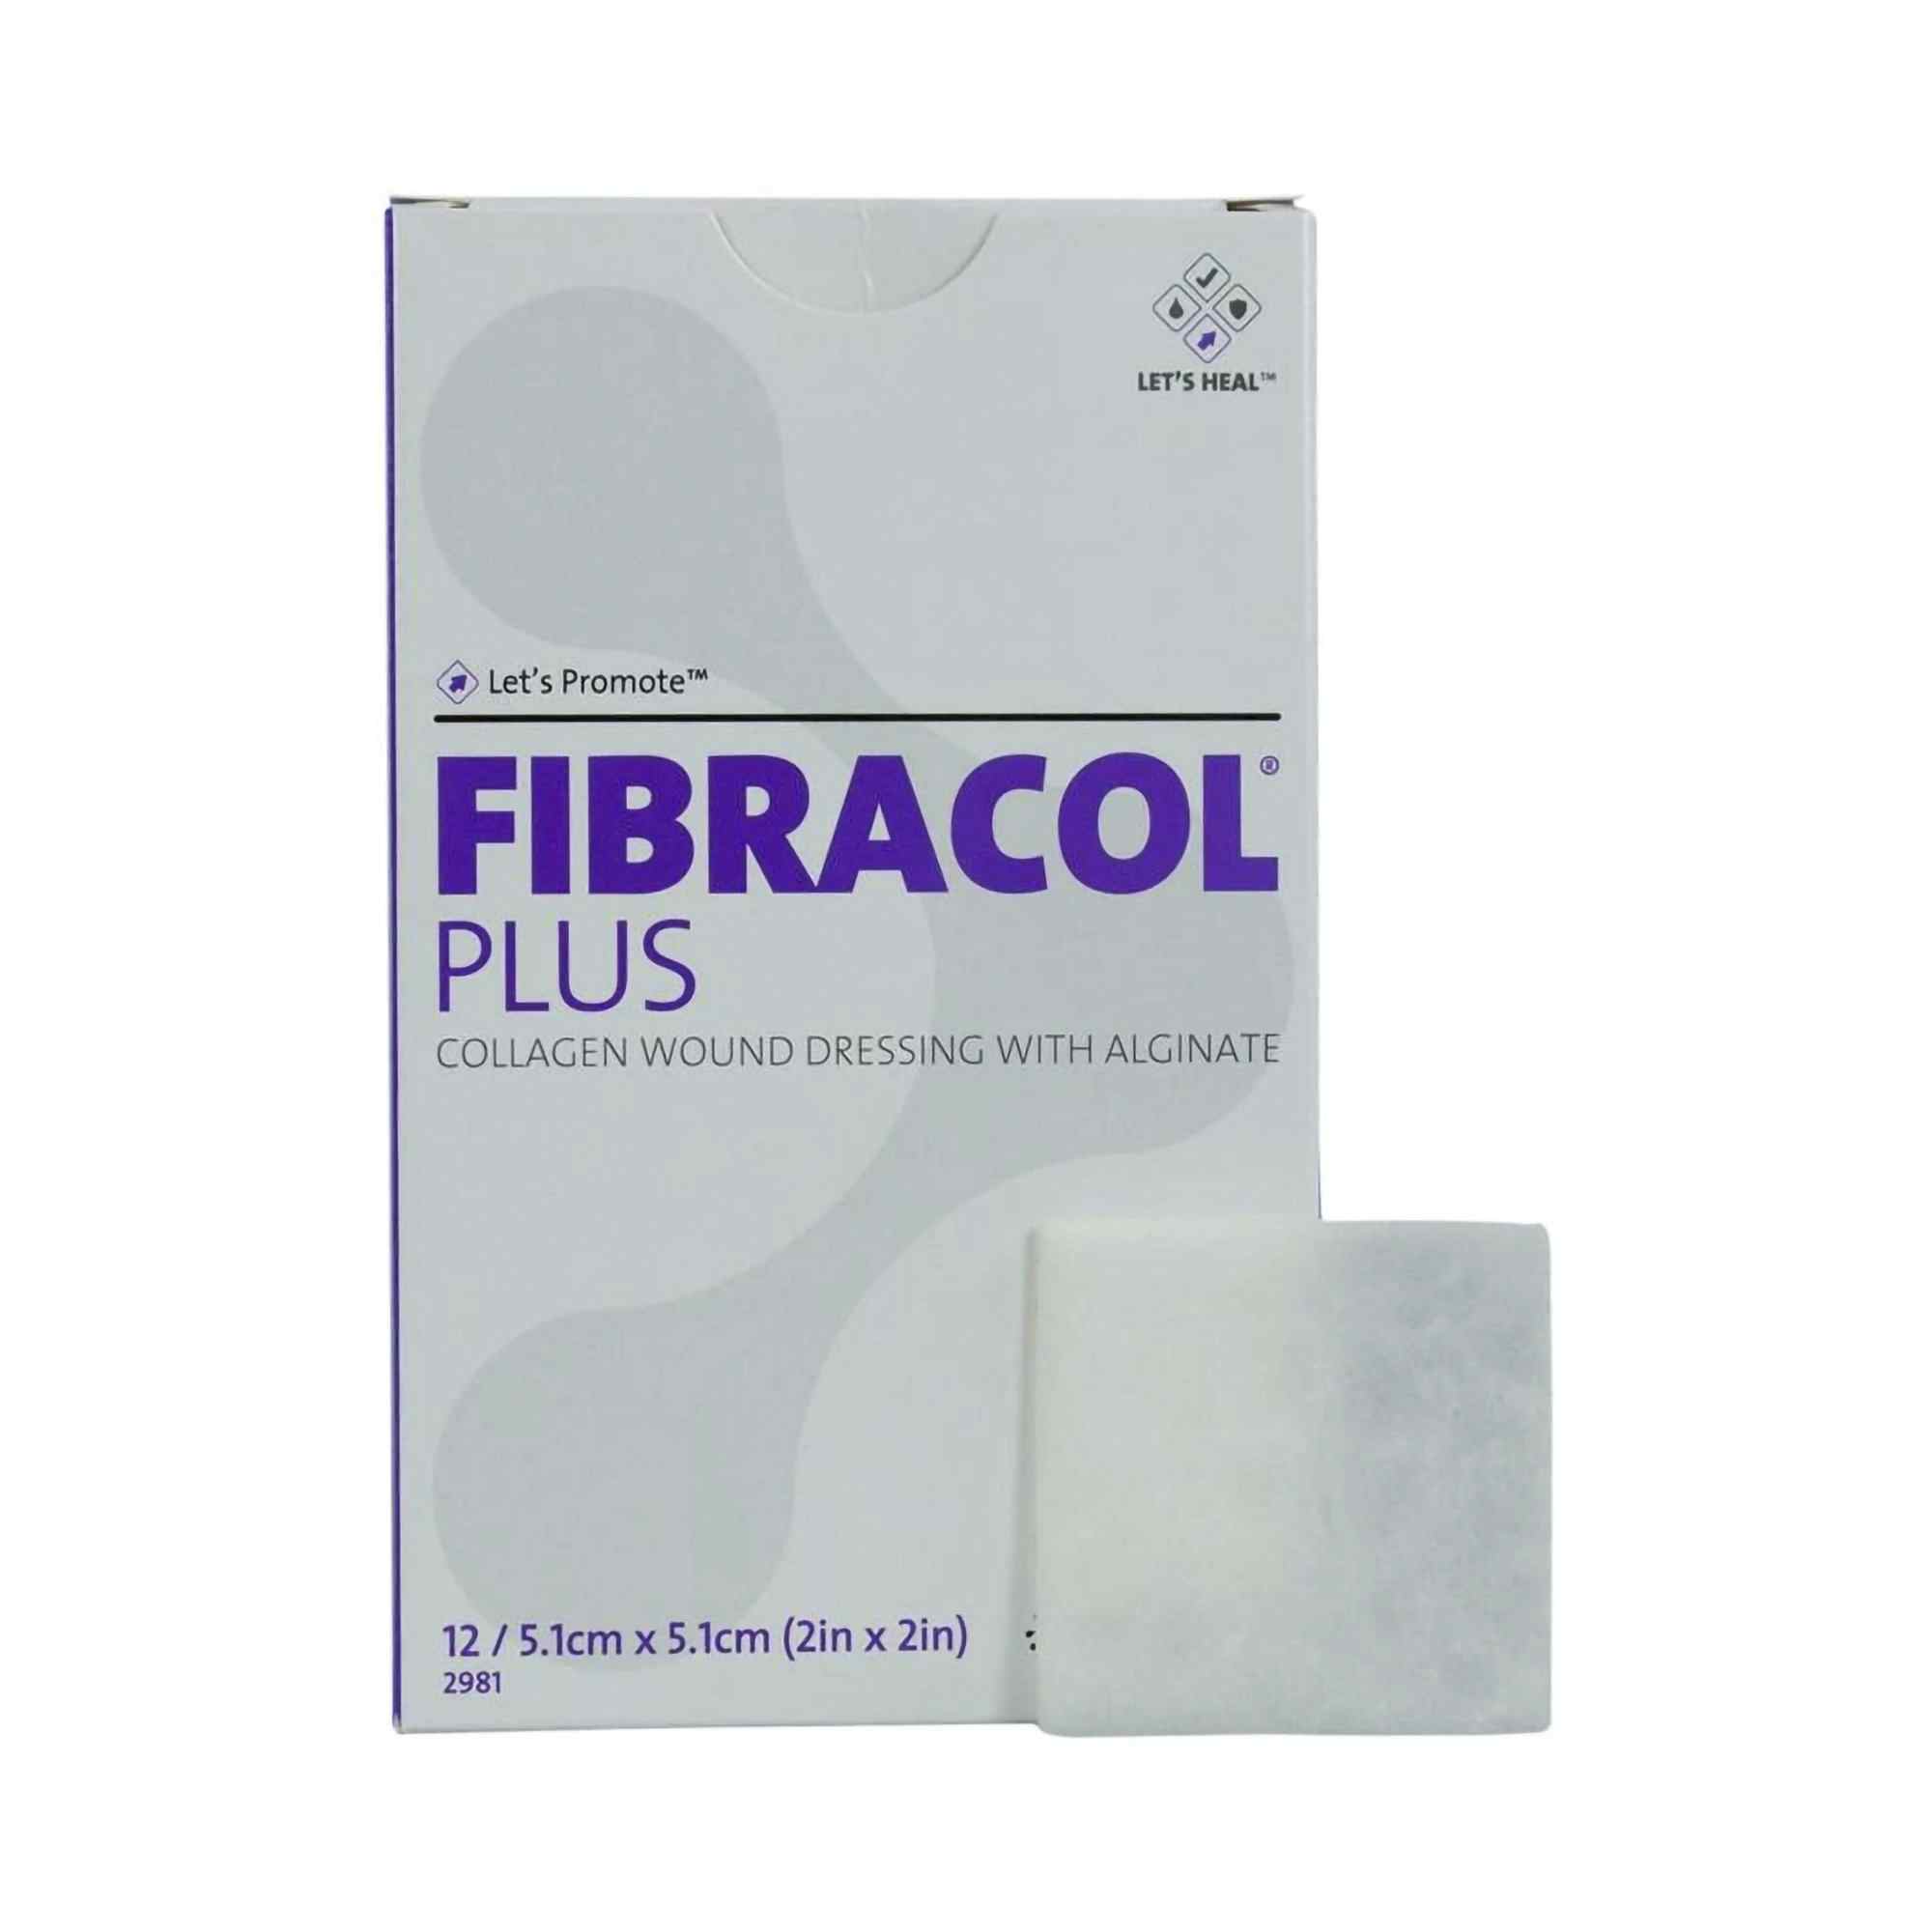 Fibracol Plus Collagen Wound Dressing with Alginate, 2 X 2", 2981, Box of 12